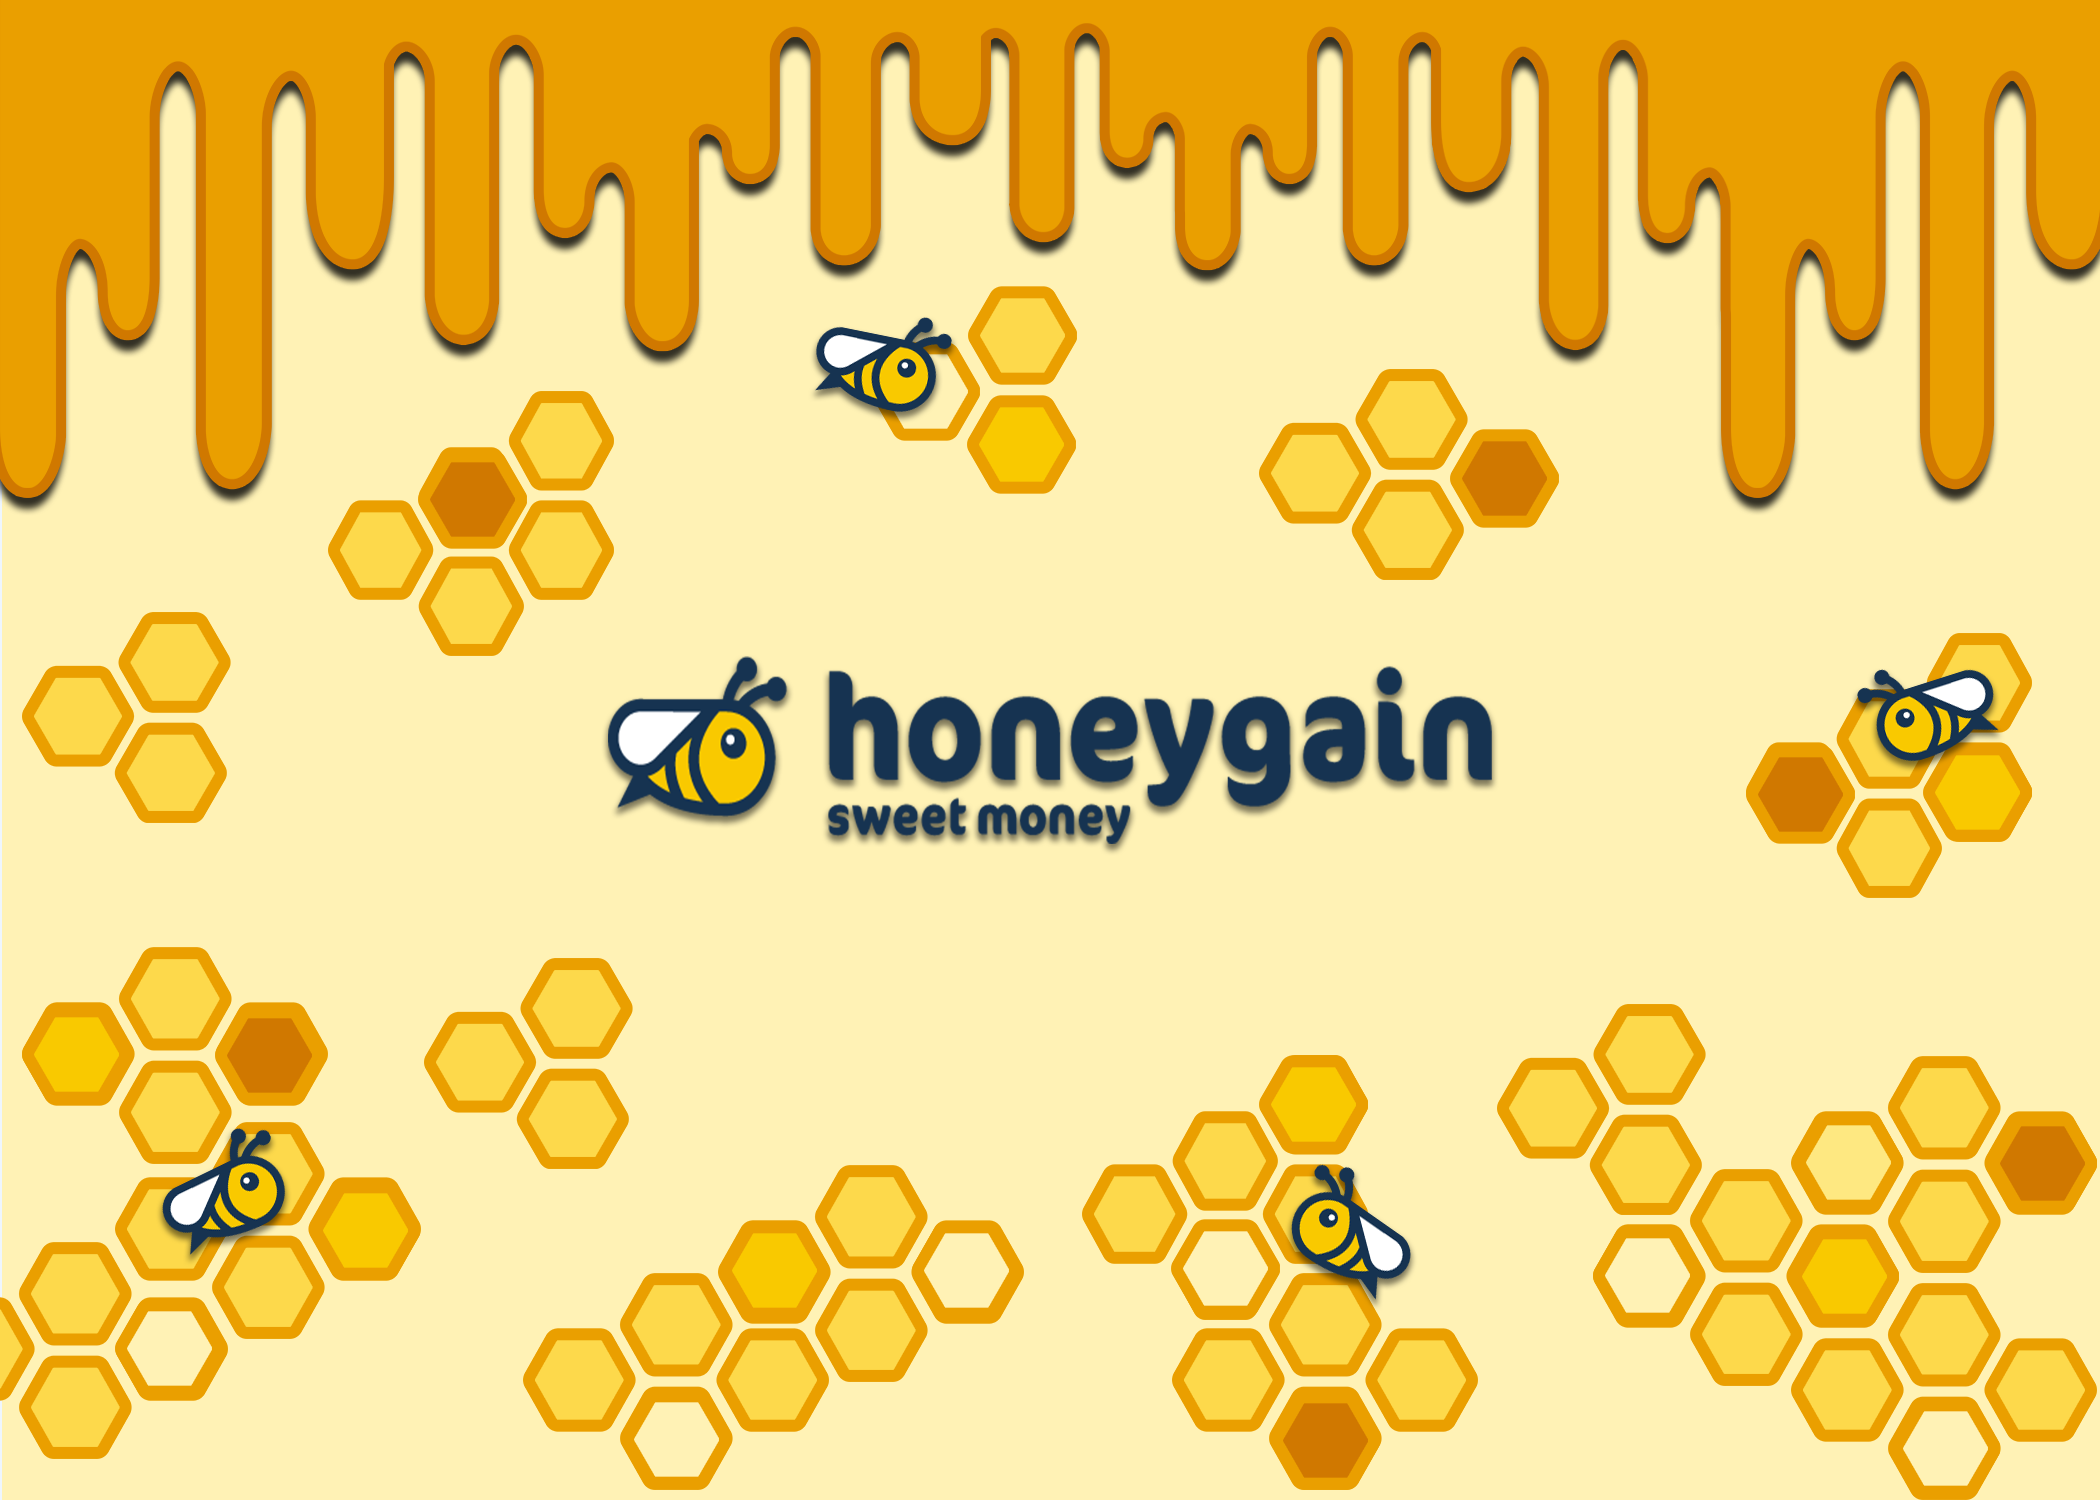 Honeygain Wallpaper Contest